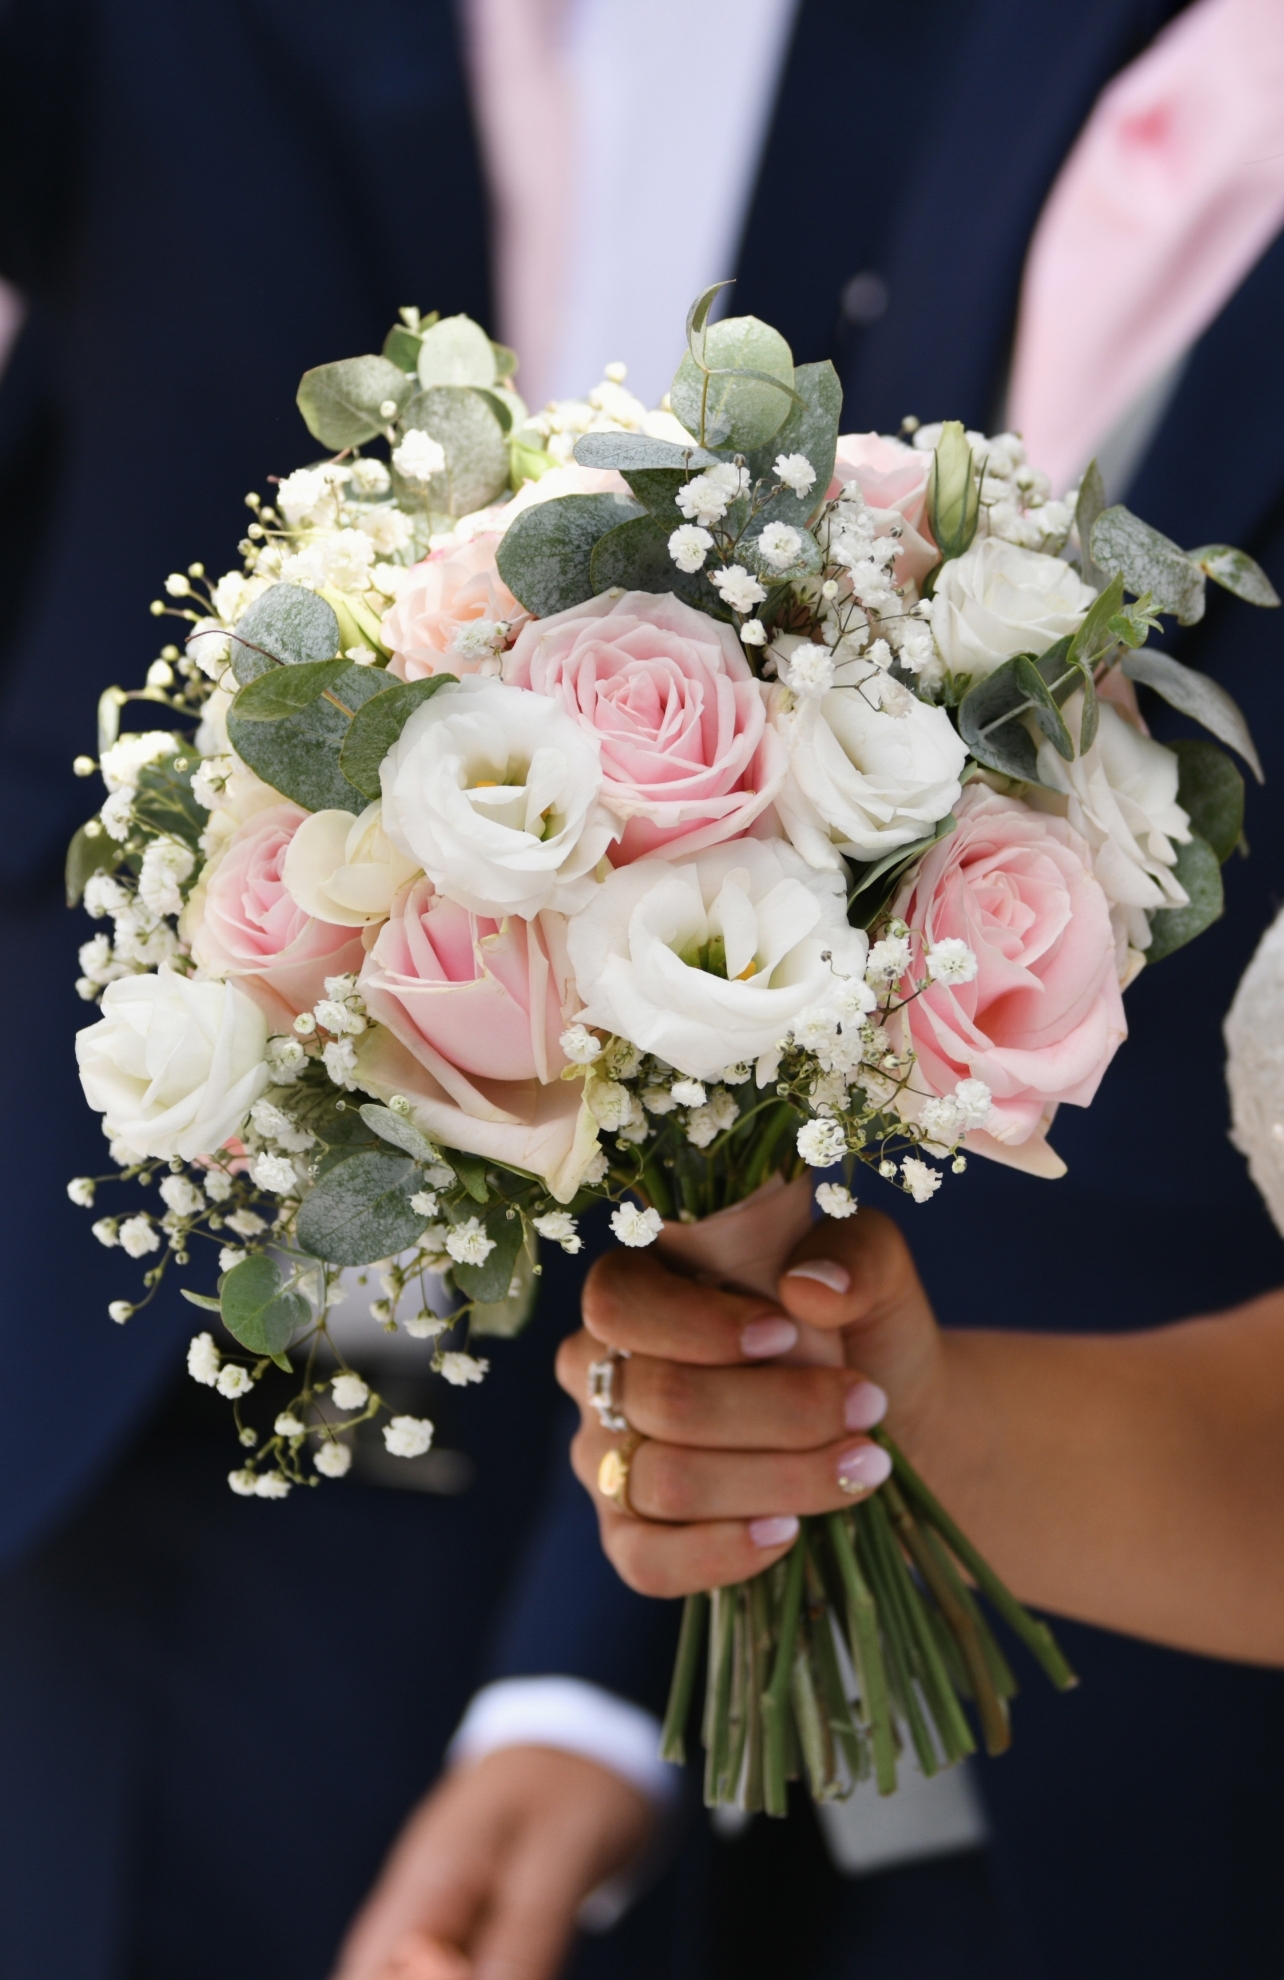 Blumen-Risse, Sortiment, Blumen, Floristik, Hochzeit, Brautstrauss, Rosa, Weiss, Gruen